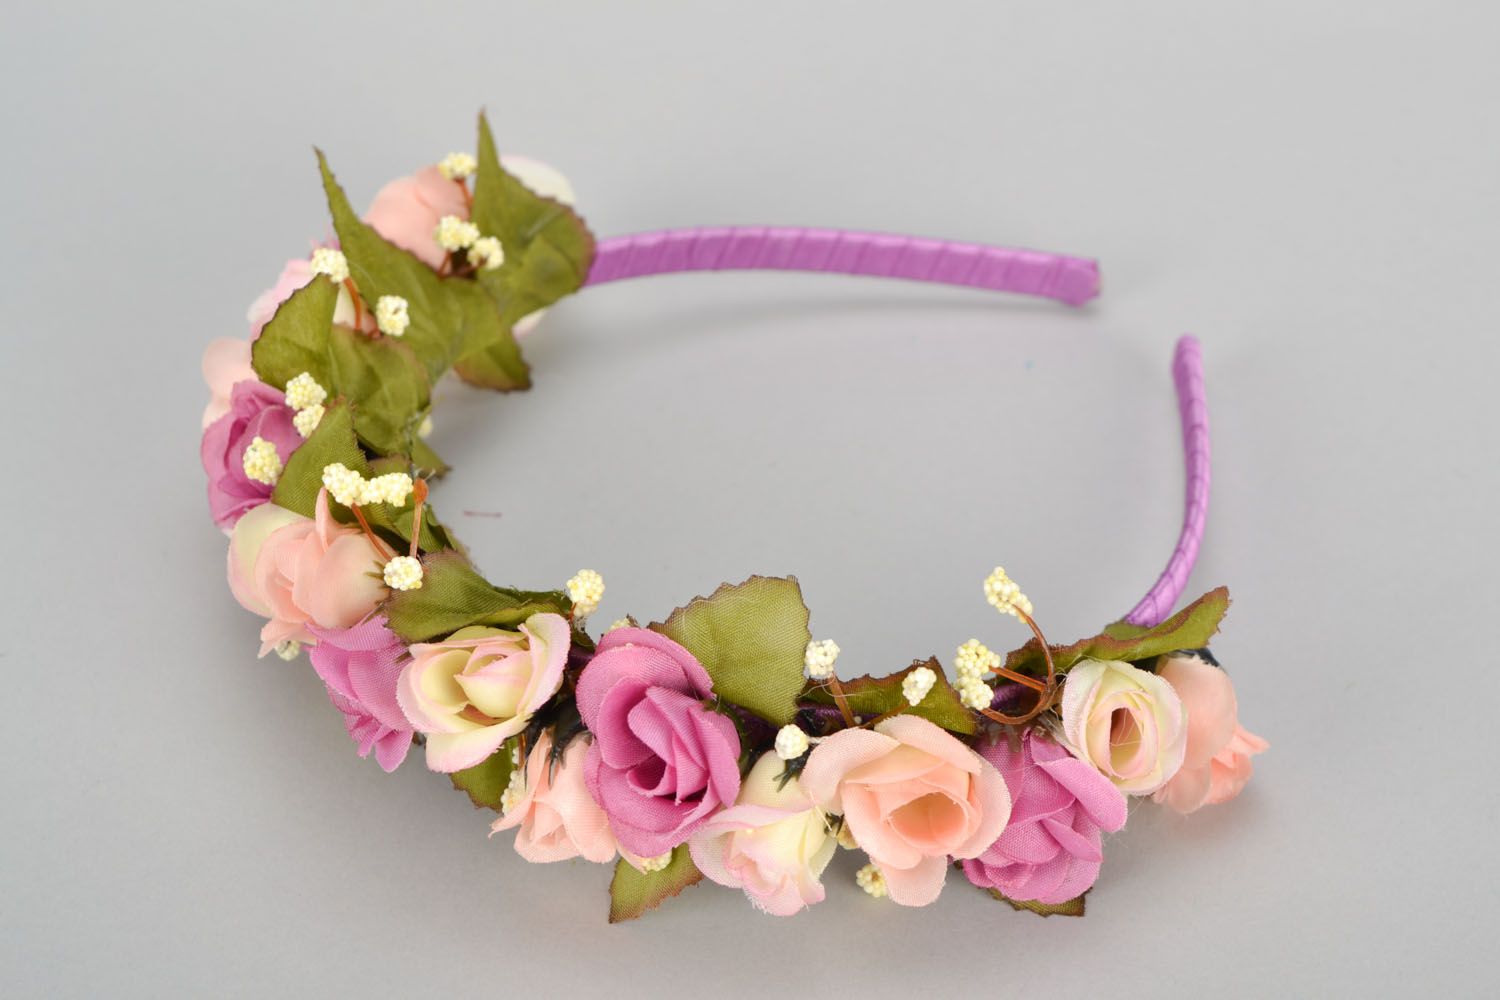 Homemade headband with flowers photo 5